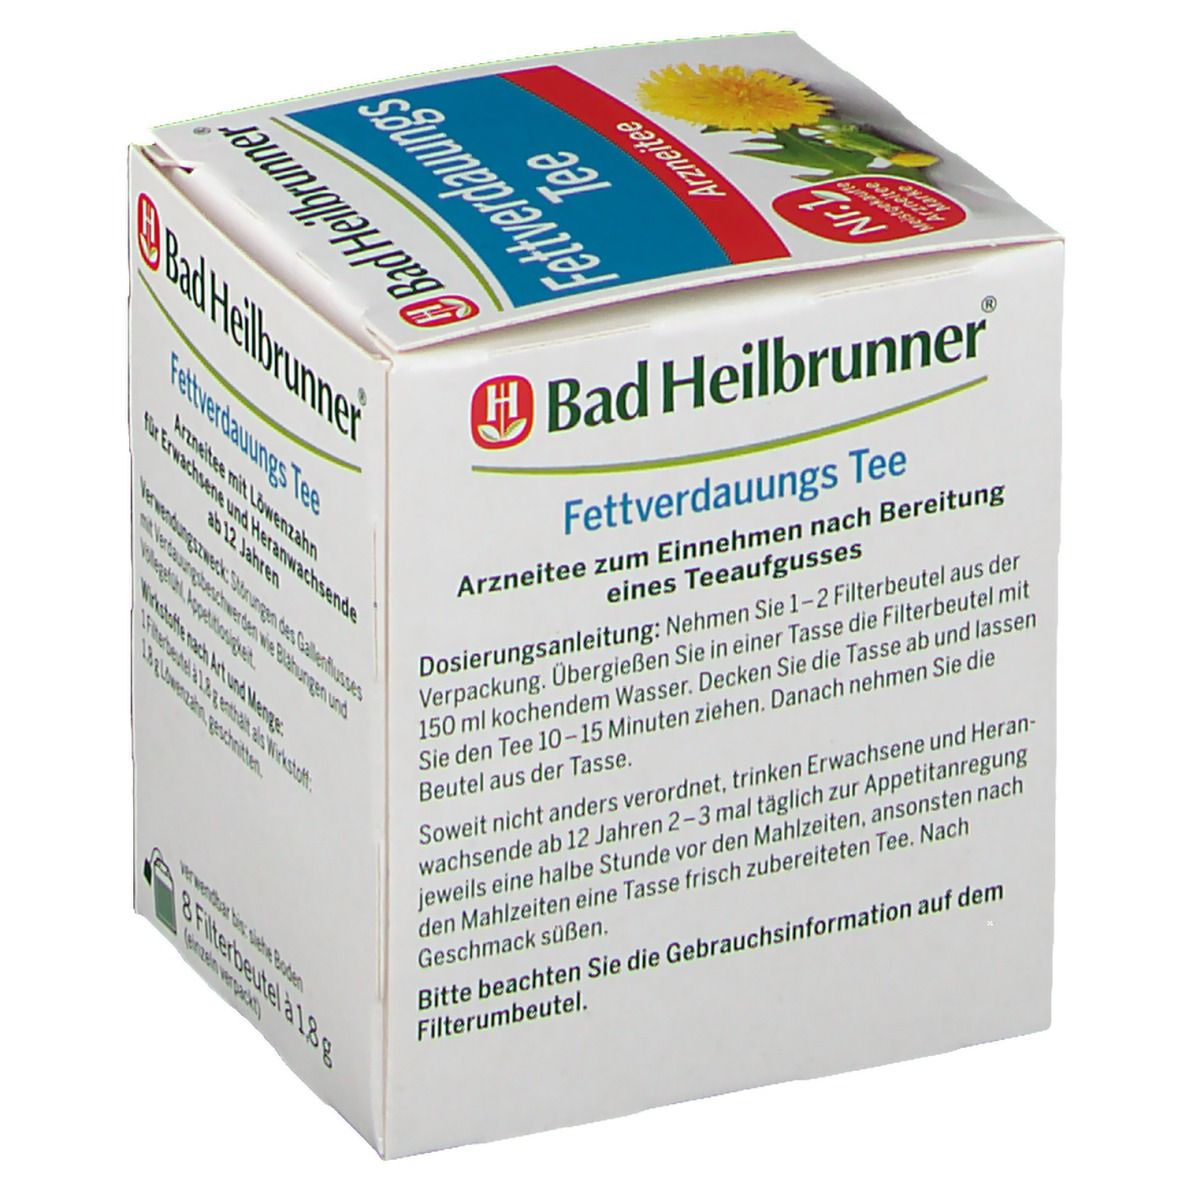 Bad Heilbrunner® Fettverdauungs Tee